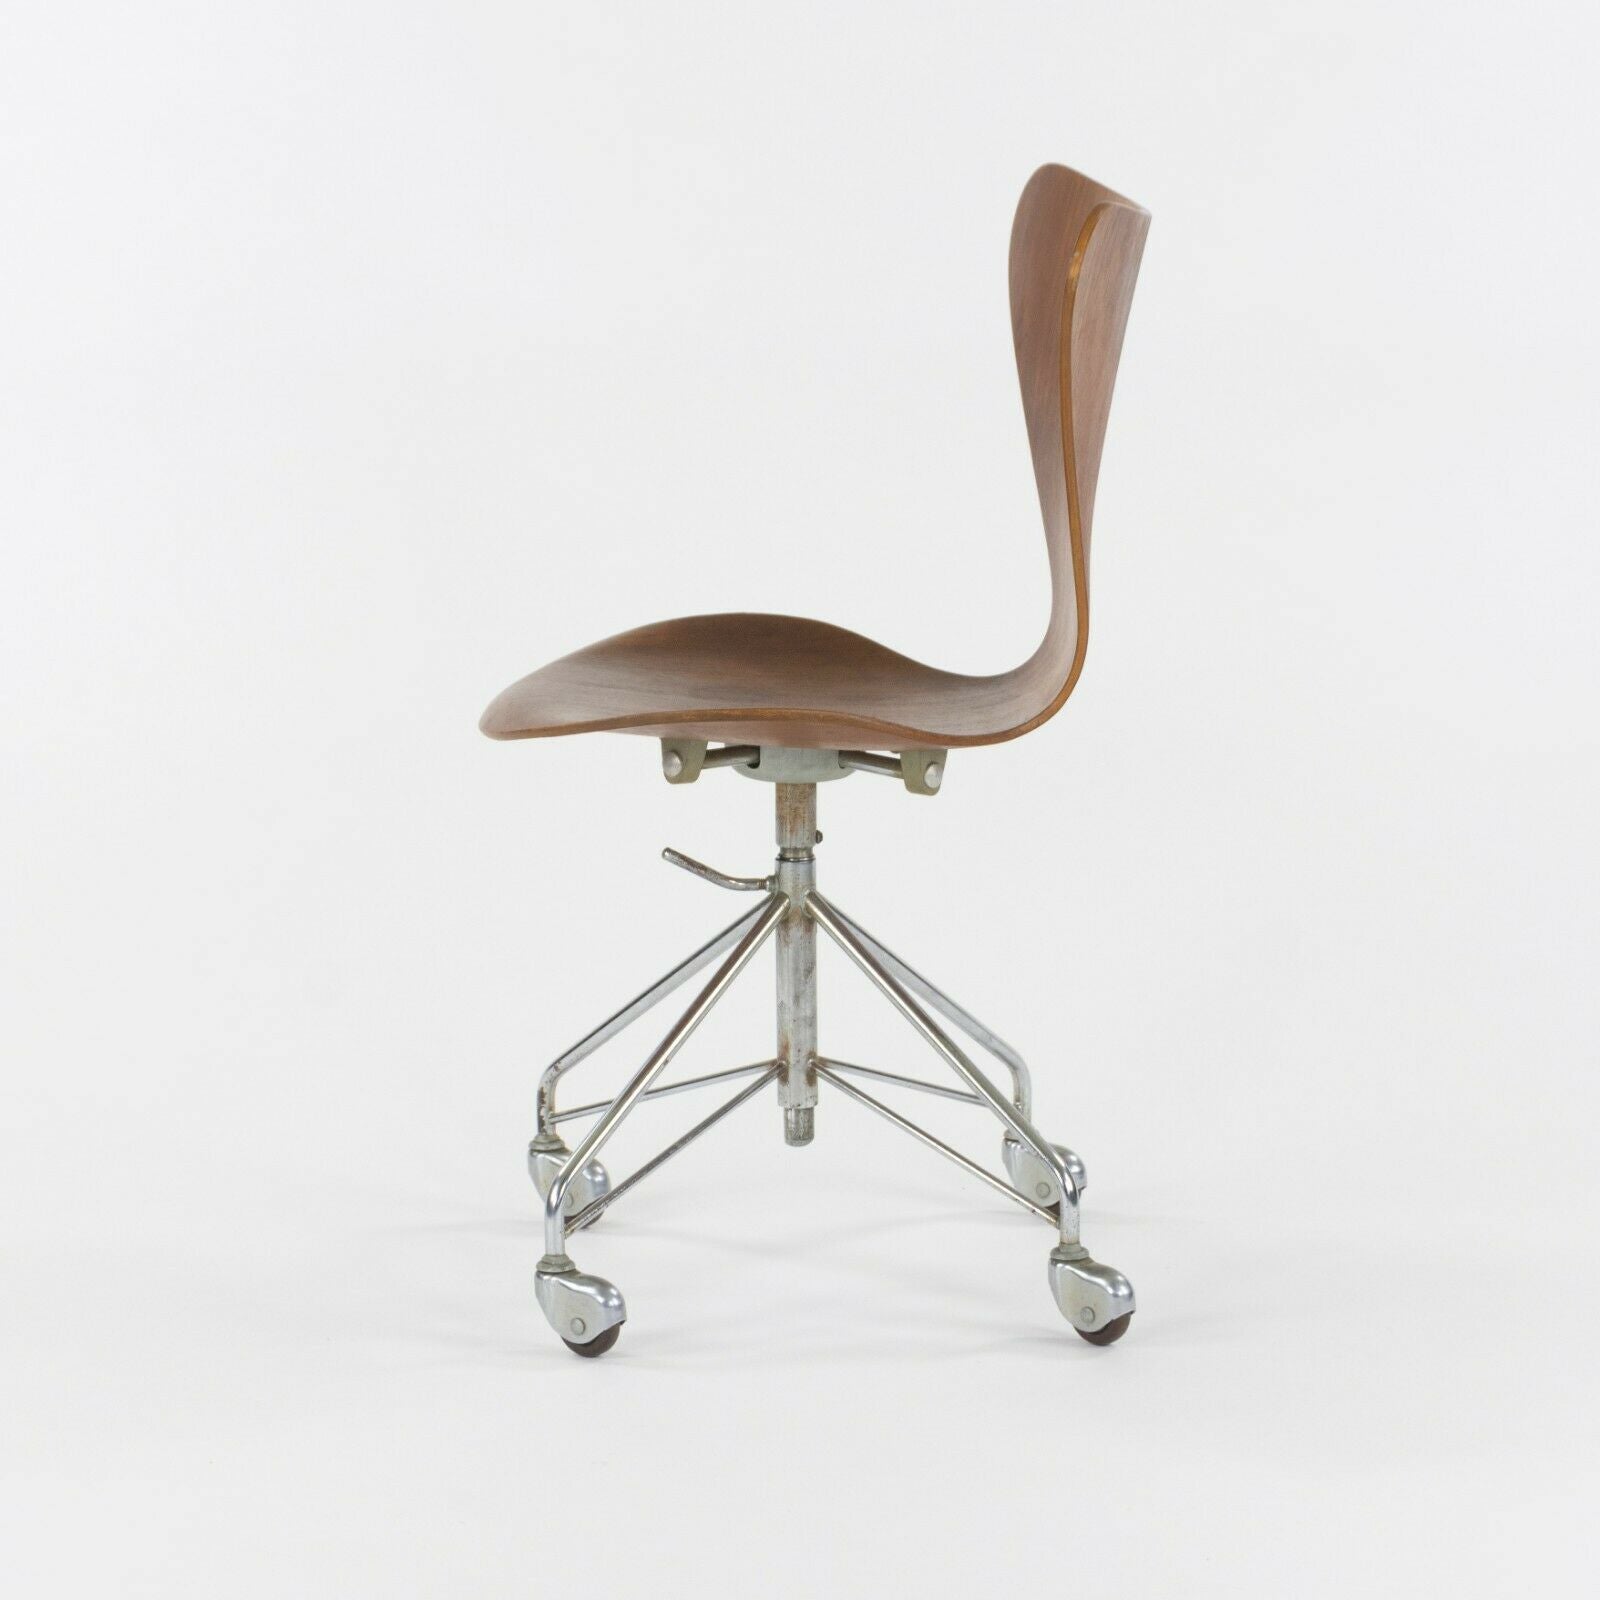 SOLD 1964 Arne Jacobsen 3117 Fritz Hansen Denmark Rolling Desk Chair Vintage Original